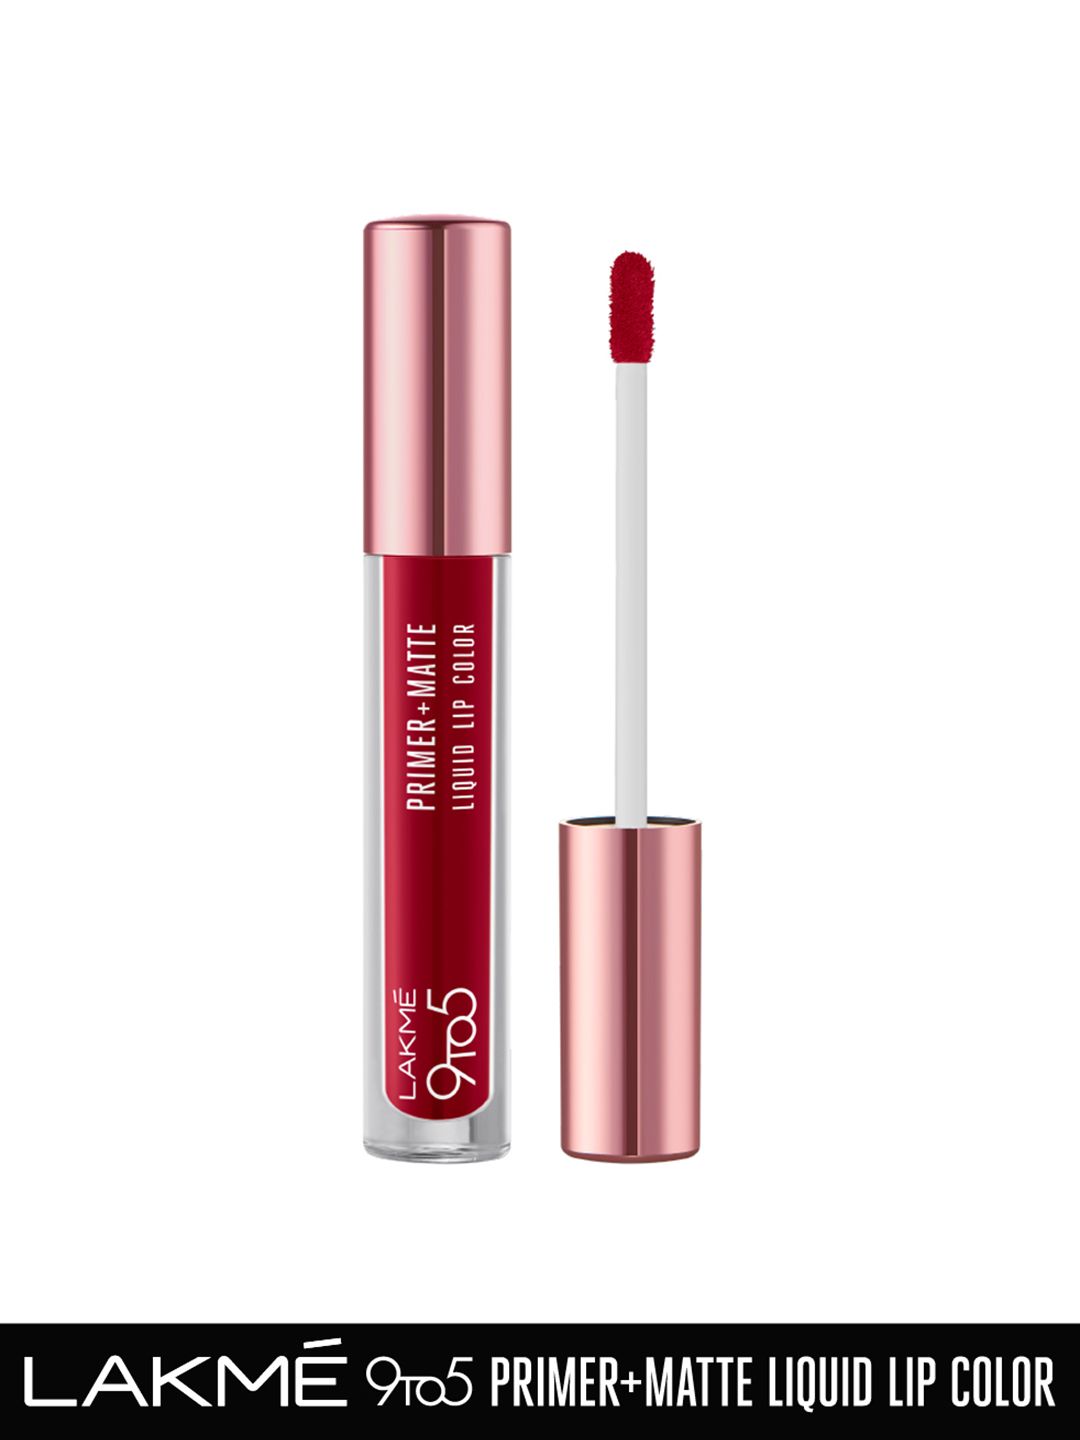 Lakme 9to5 Primer + Matte Liquid Lip Color 4.2 ml - Vivid Crimson MR3 Price in India